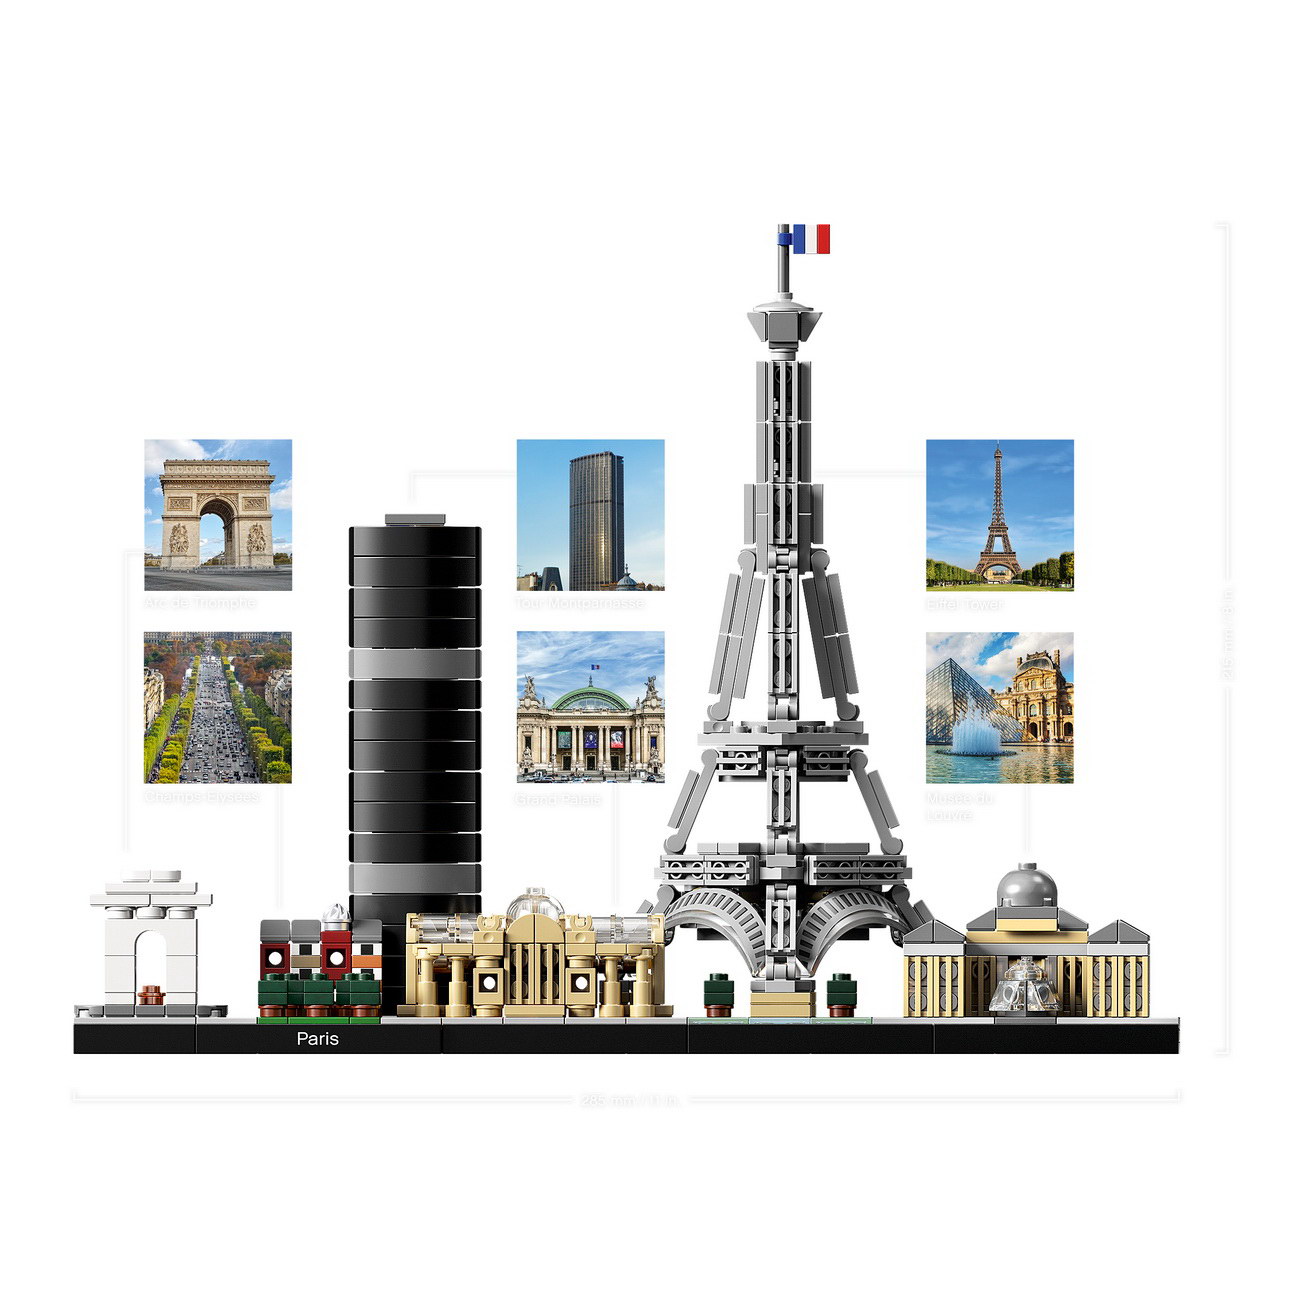 LEGO Architecture 21044 - Paris Skyline